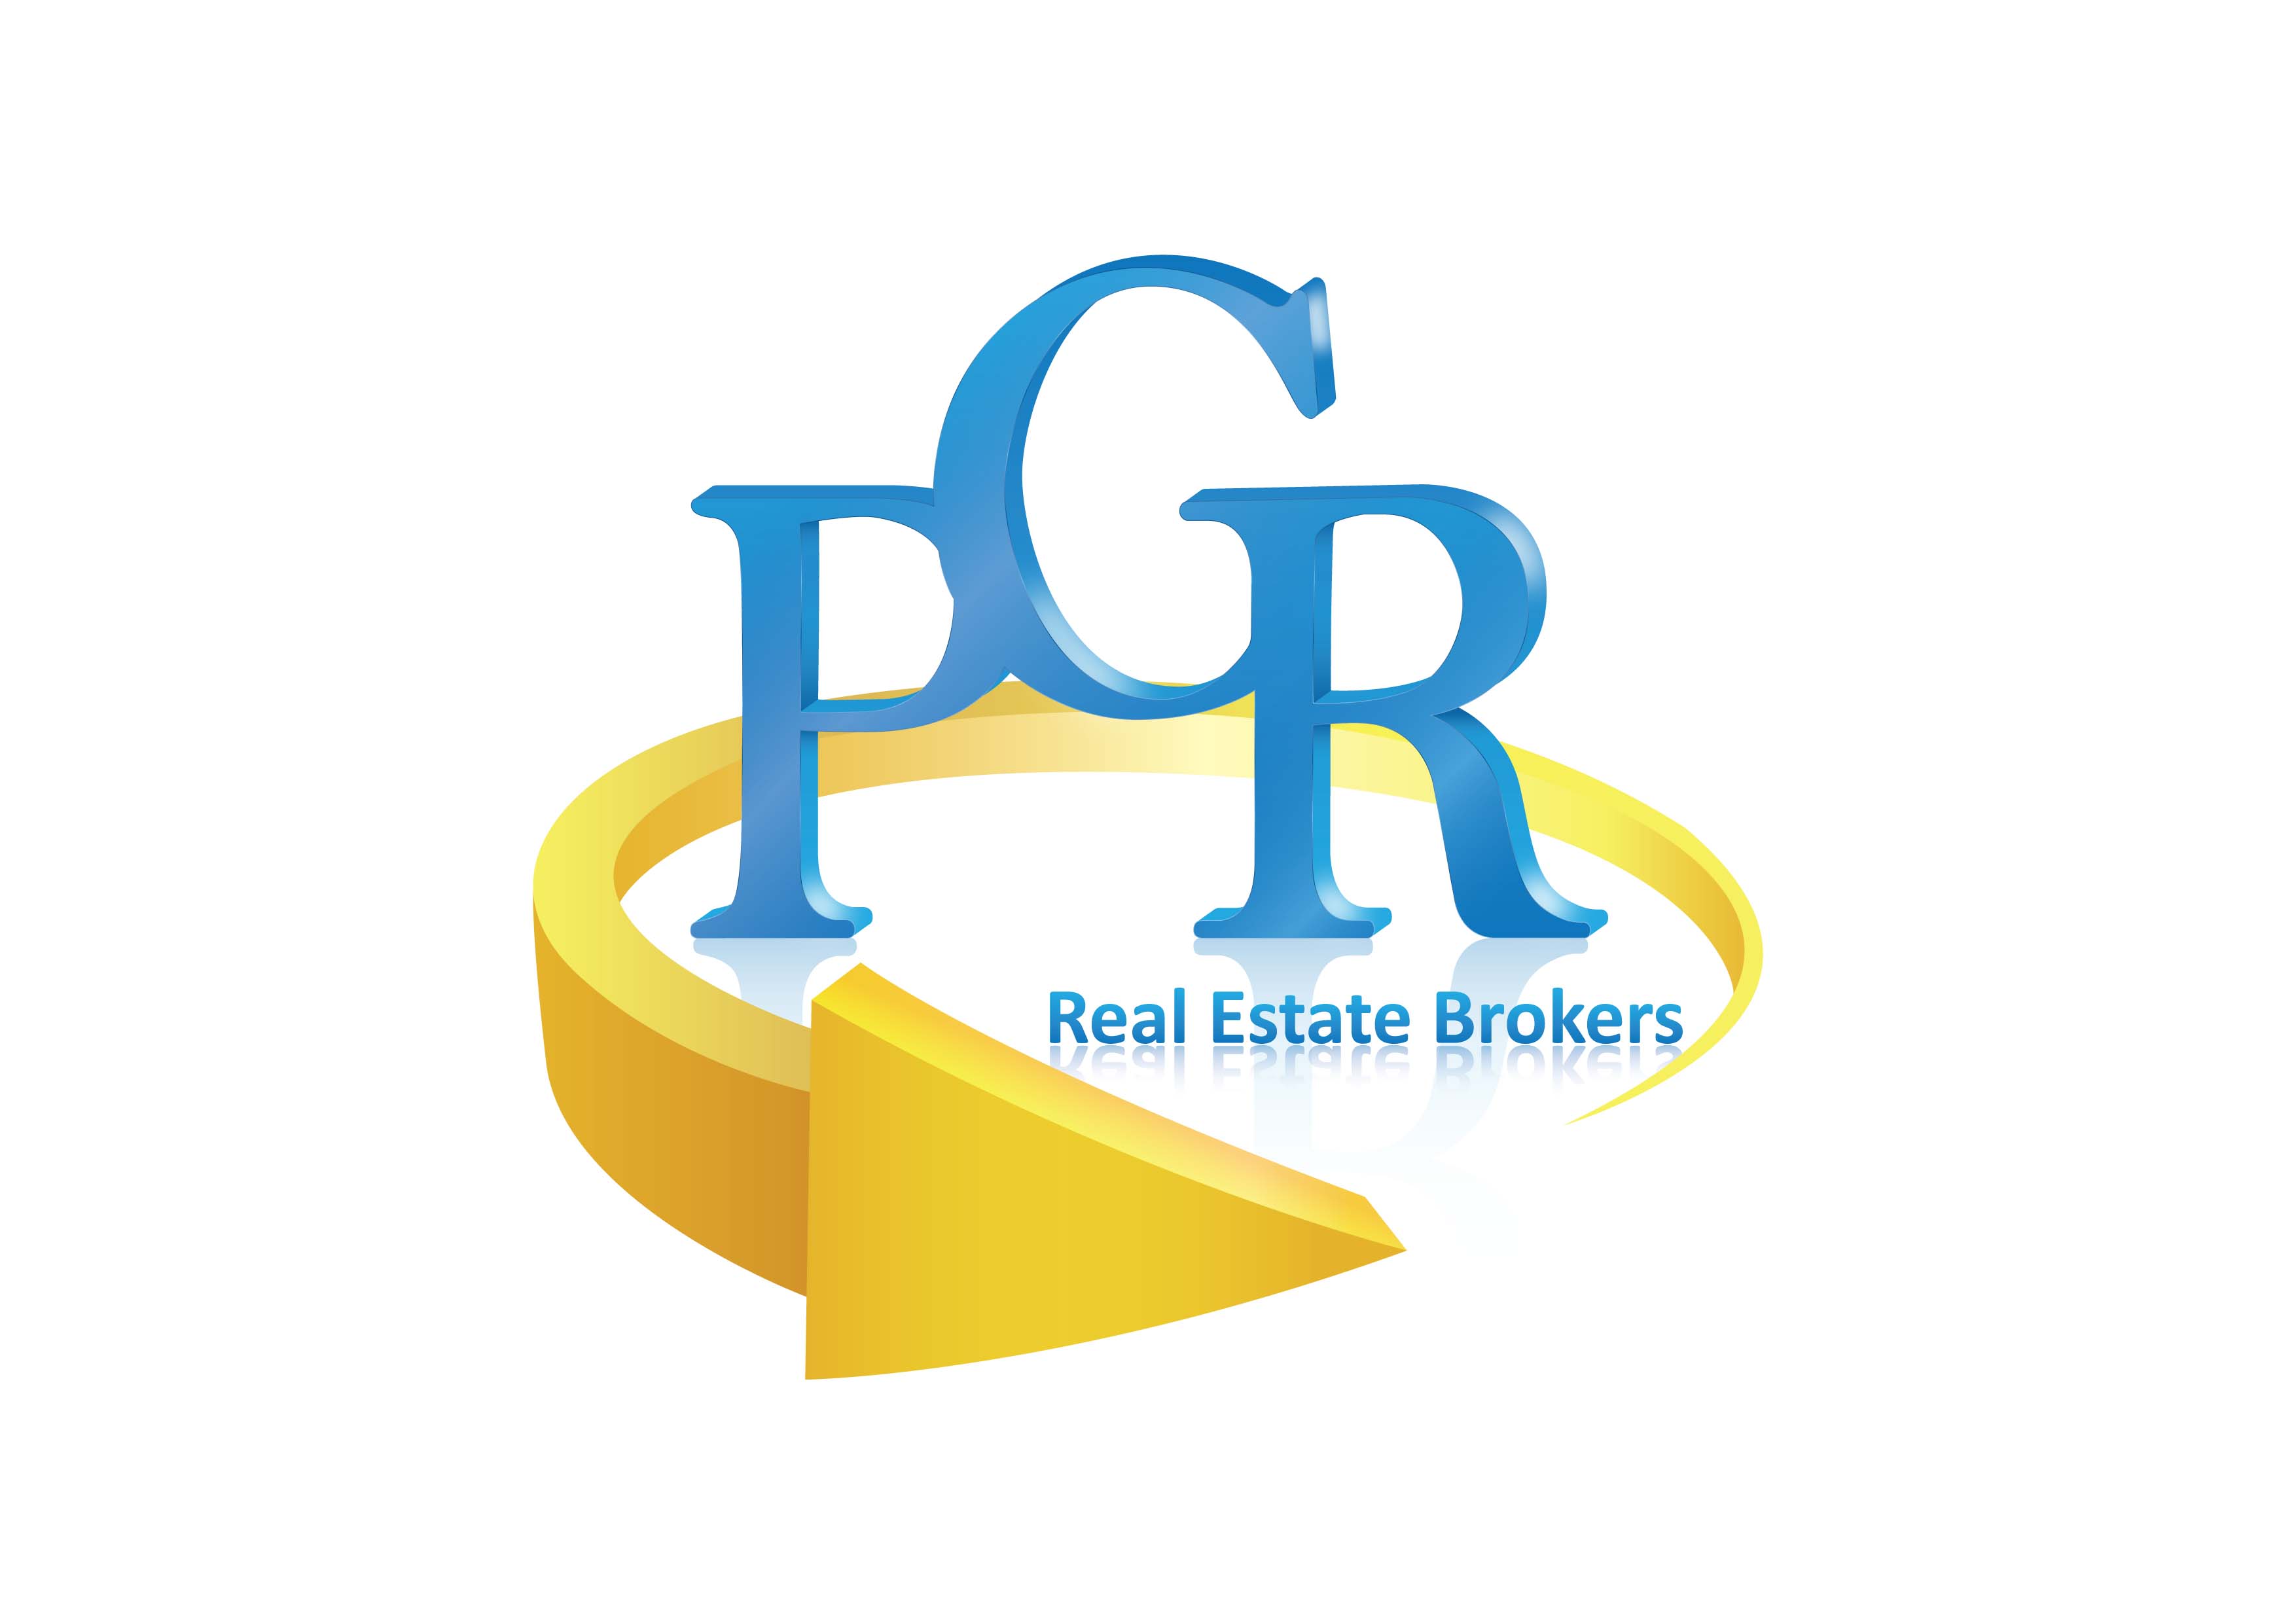 PGR Real Estate Brokers